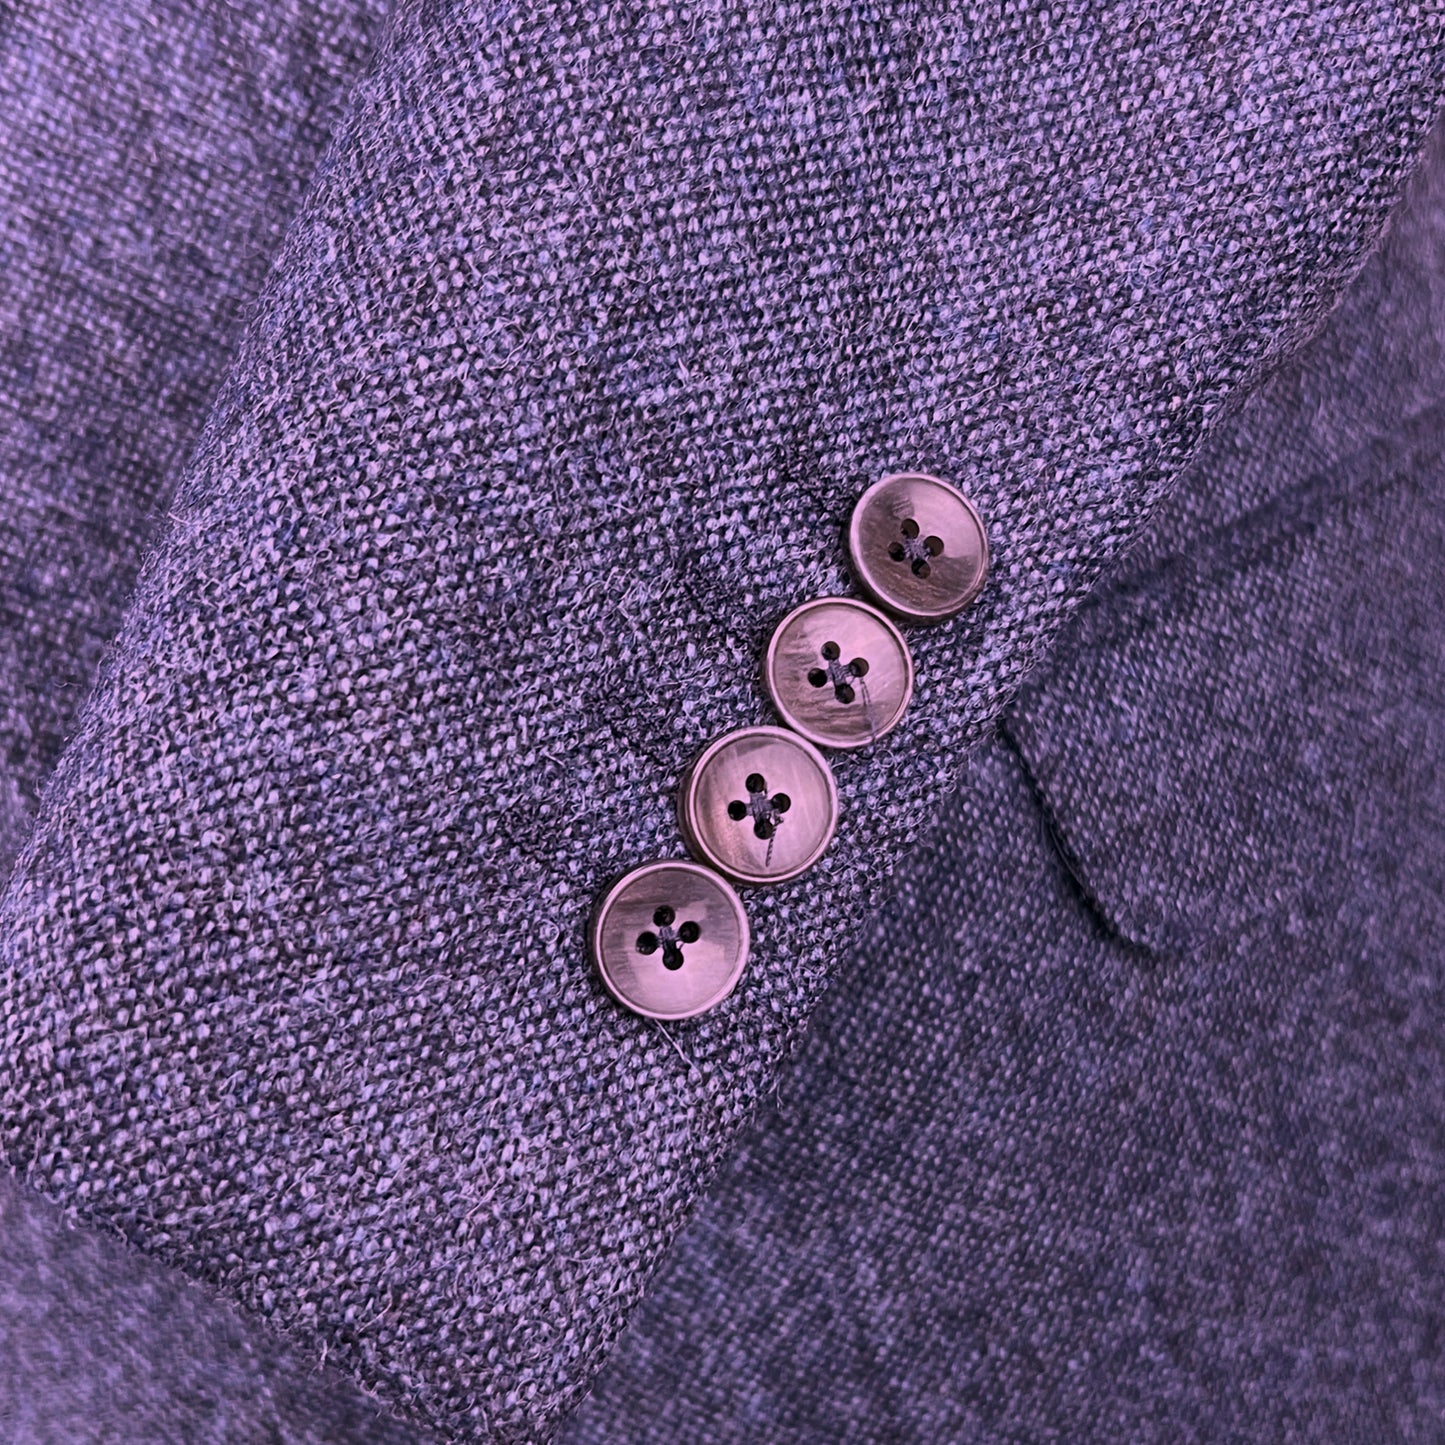 Donegal Tweed Coat - Blue